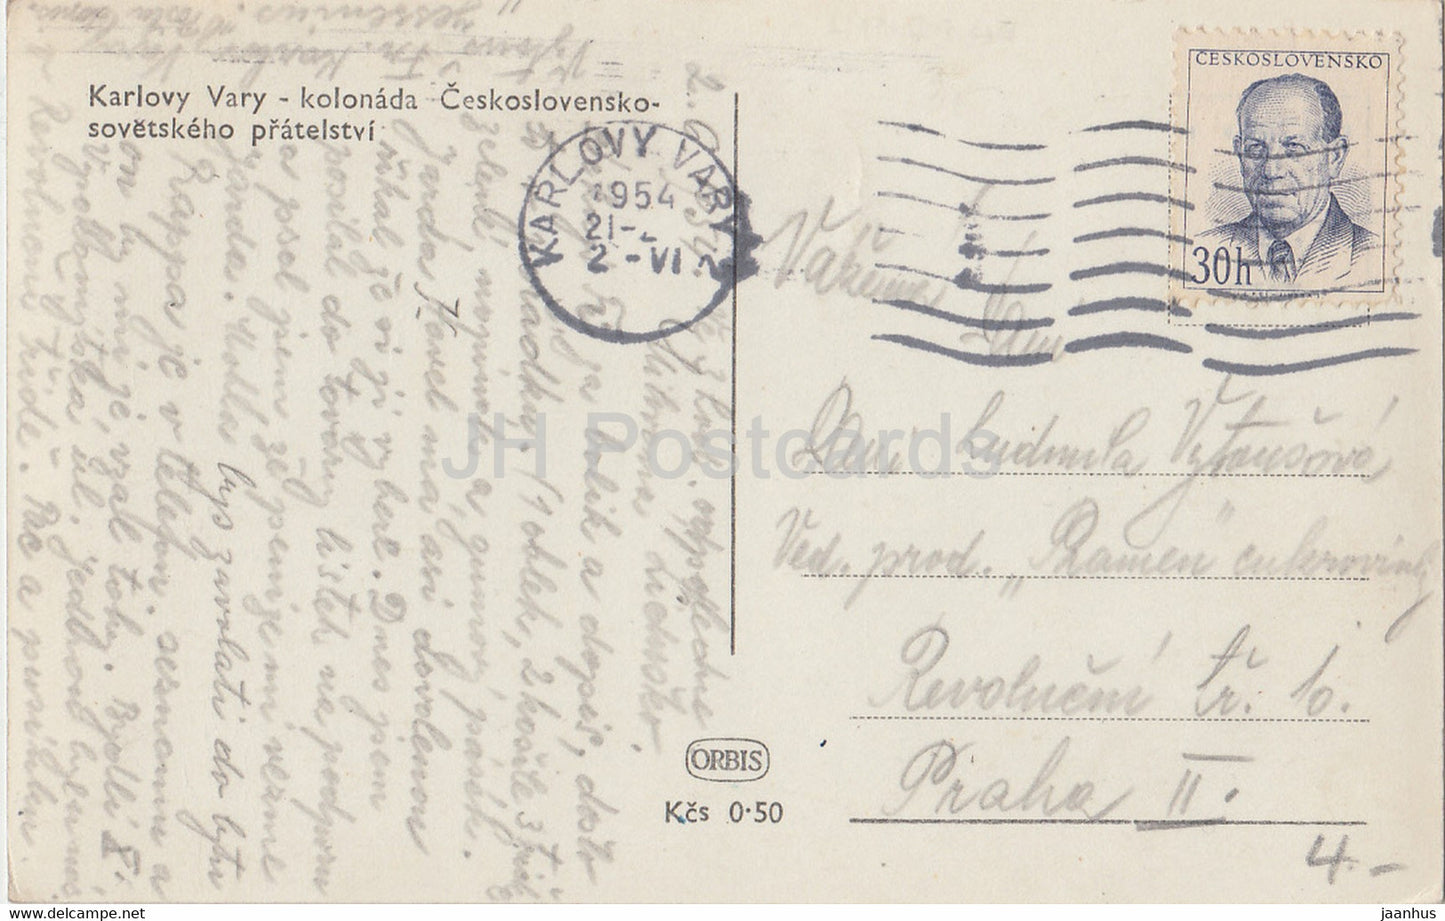 Karlovy Vary - Karlsbad - kolonada - Colonnade - old postcard - 1954 - Czechoslovakia - Czech Republic - used